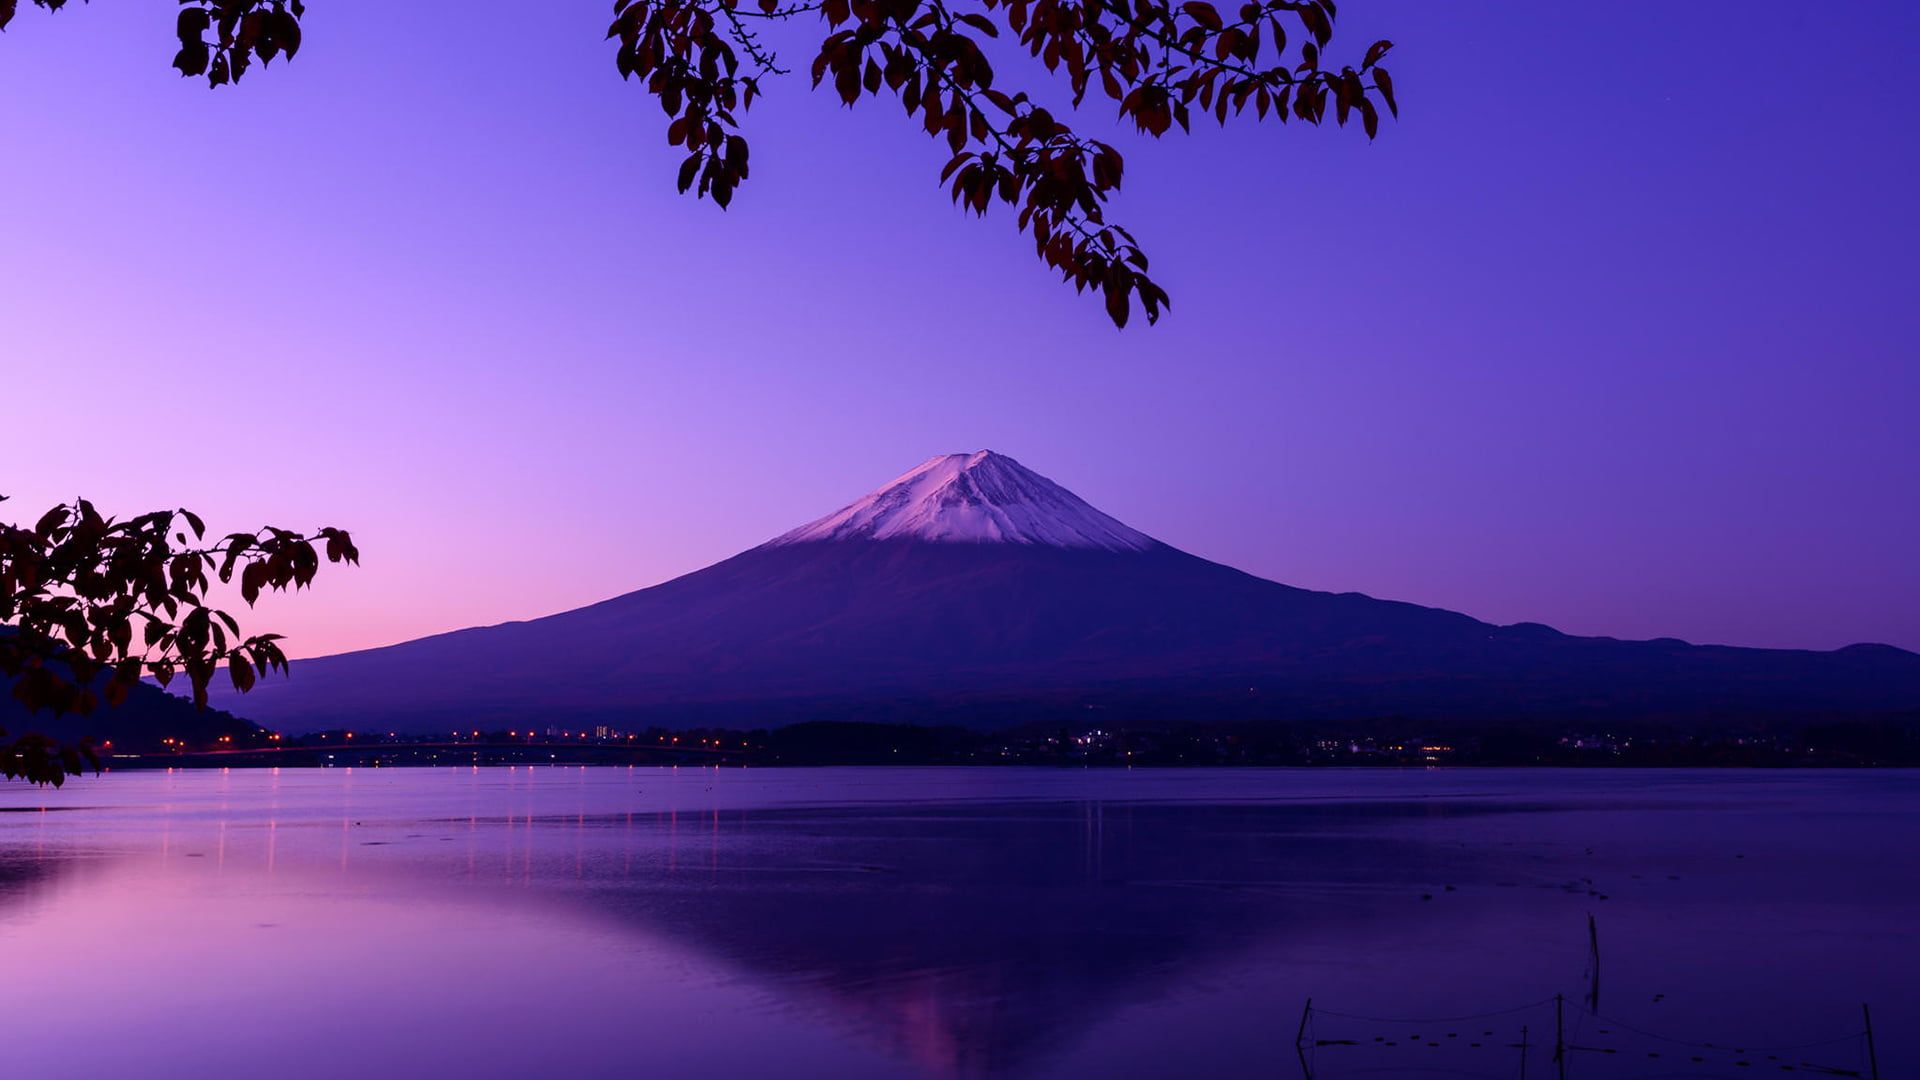 Mount Fuji, Japan Mount Fuji #Japan #landscape calm waters #violet #lake clear sky P #wallpaper #hdwallpaper #desk. Japan landscape, Mount fuji, Wallpaper pc